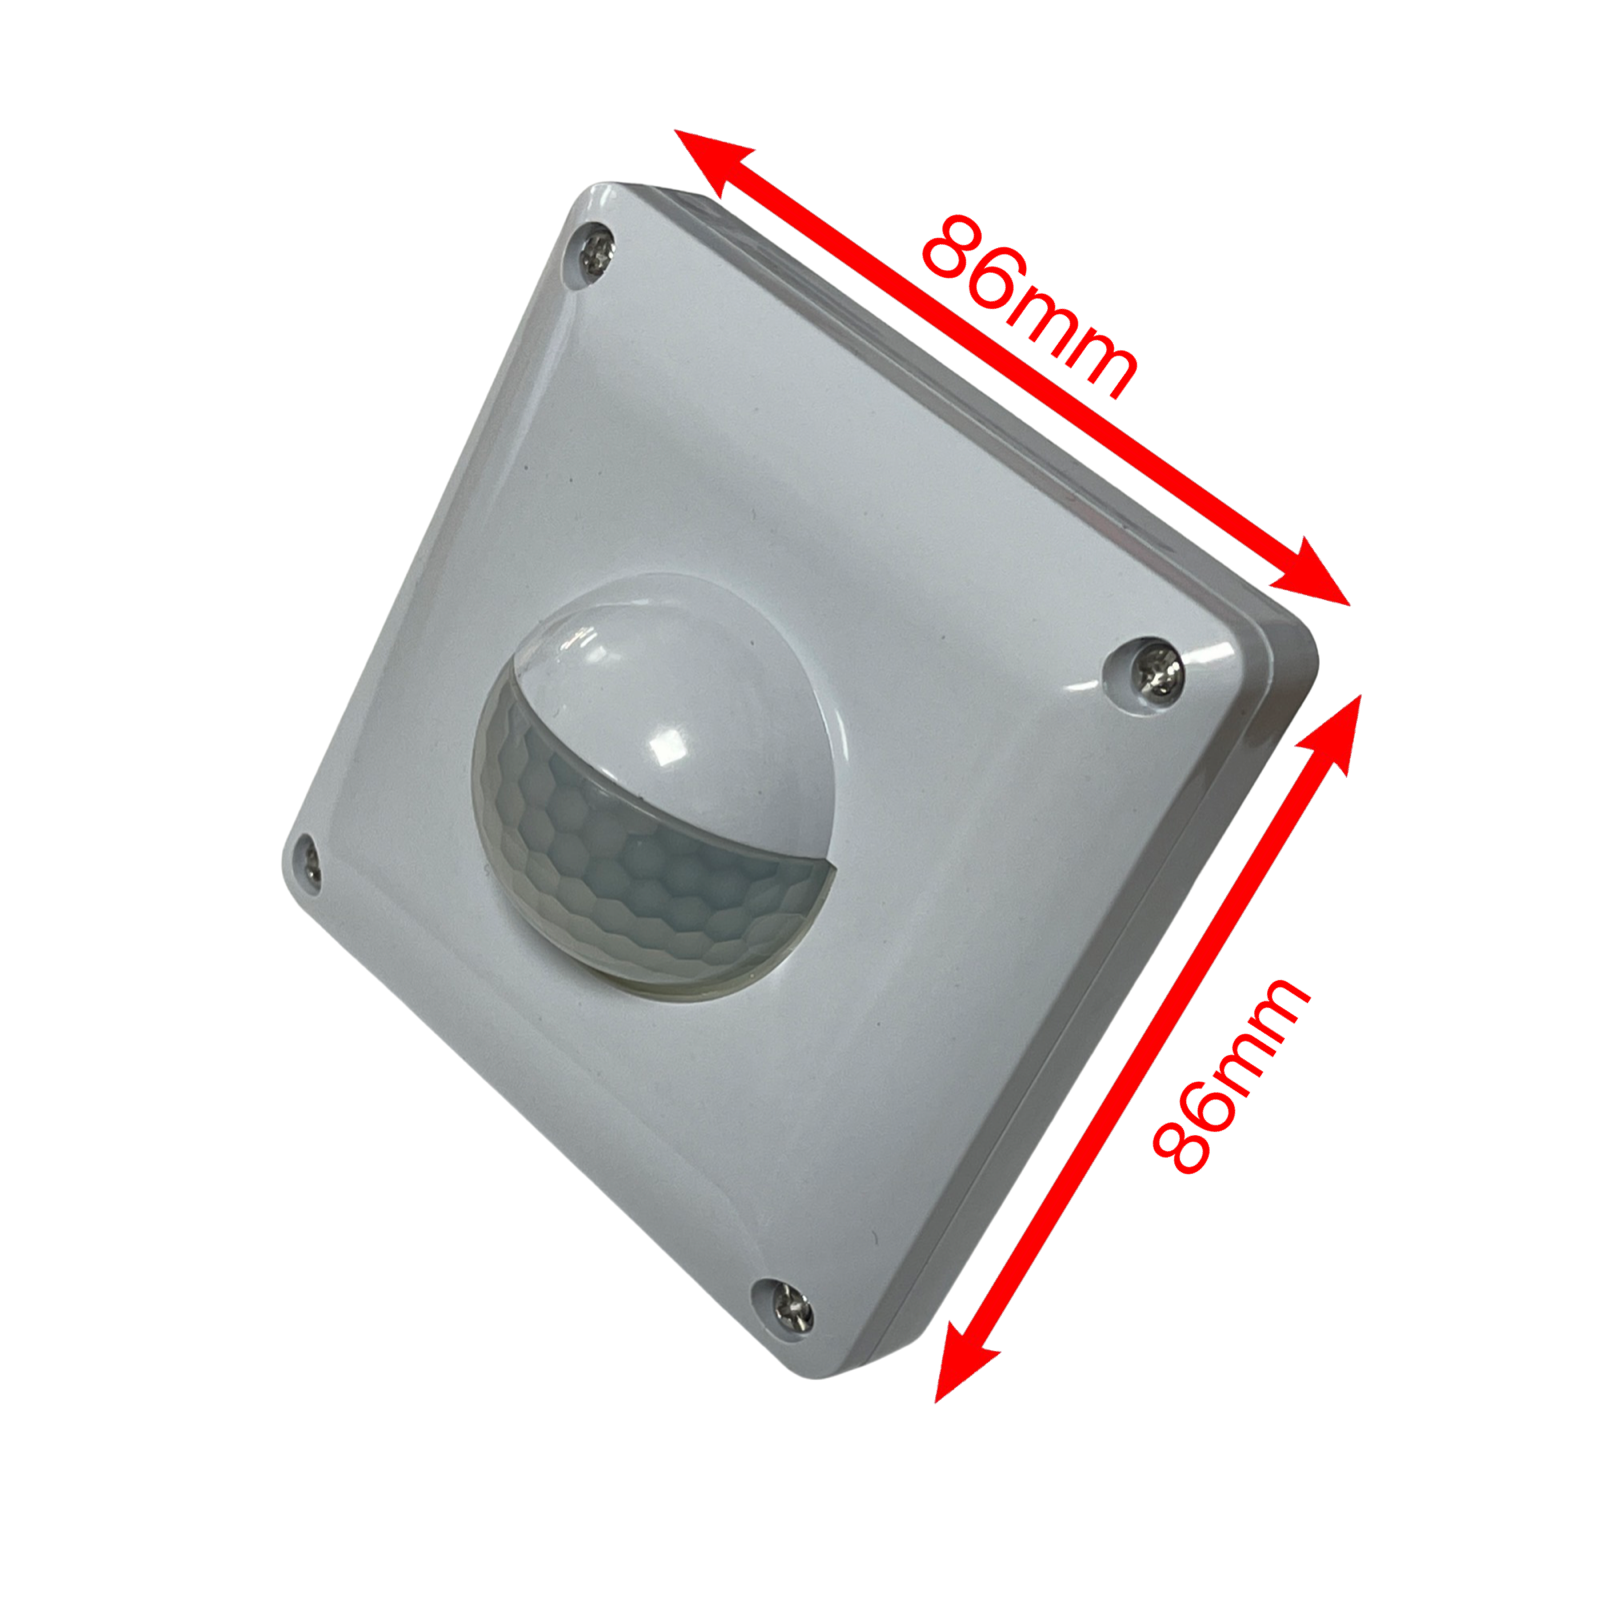 Automatic Light switch Wall Plate PIR Motion  Sensor IP65 Outdoor/Indoor UKEW